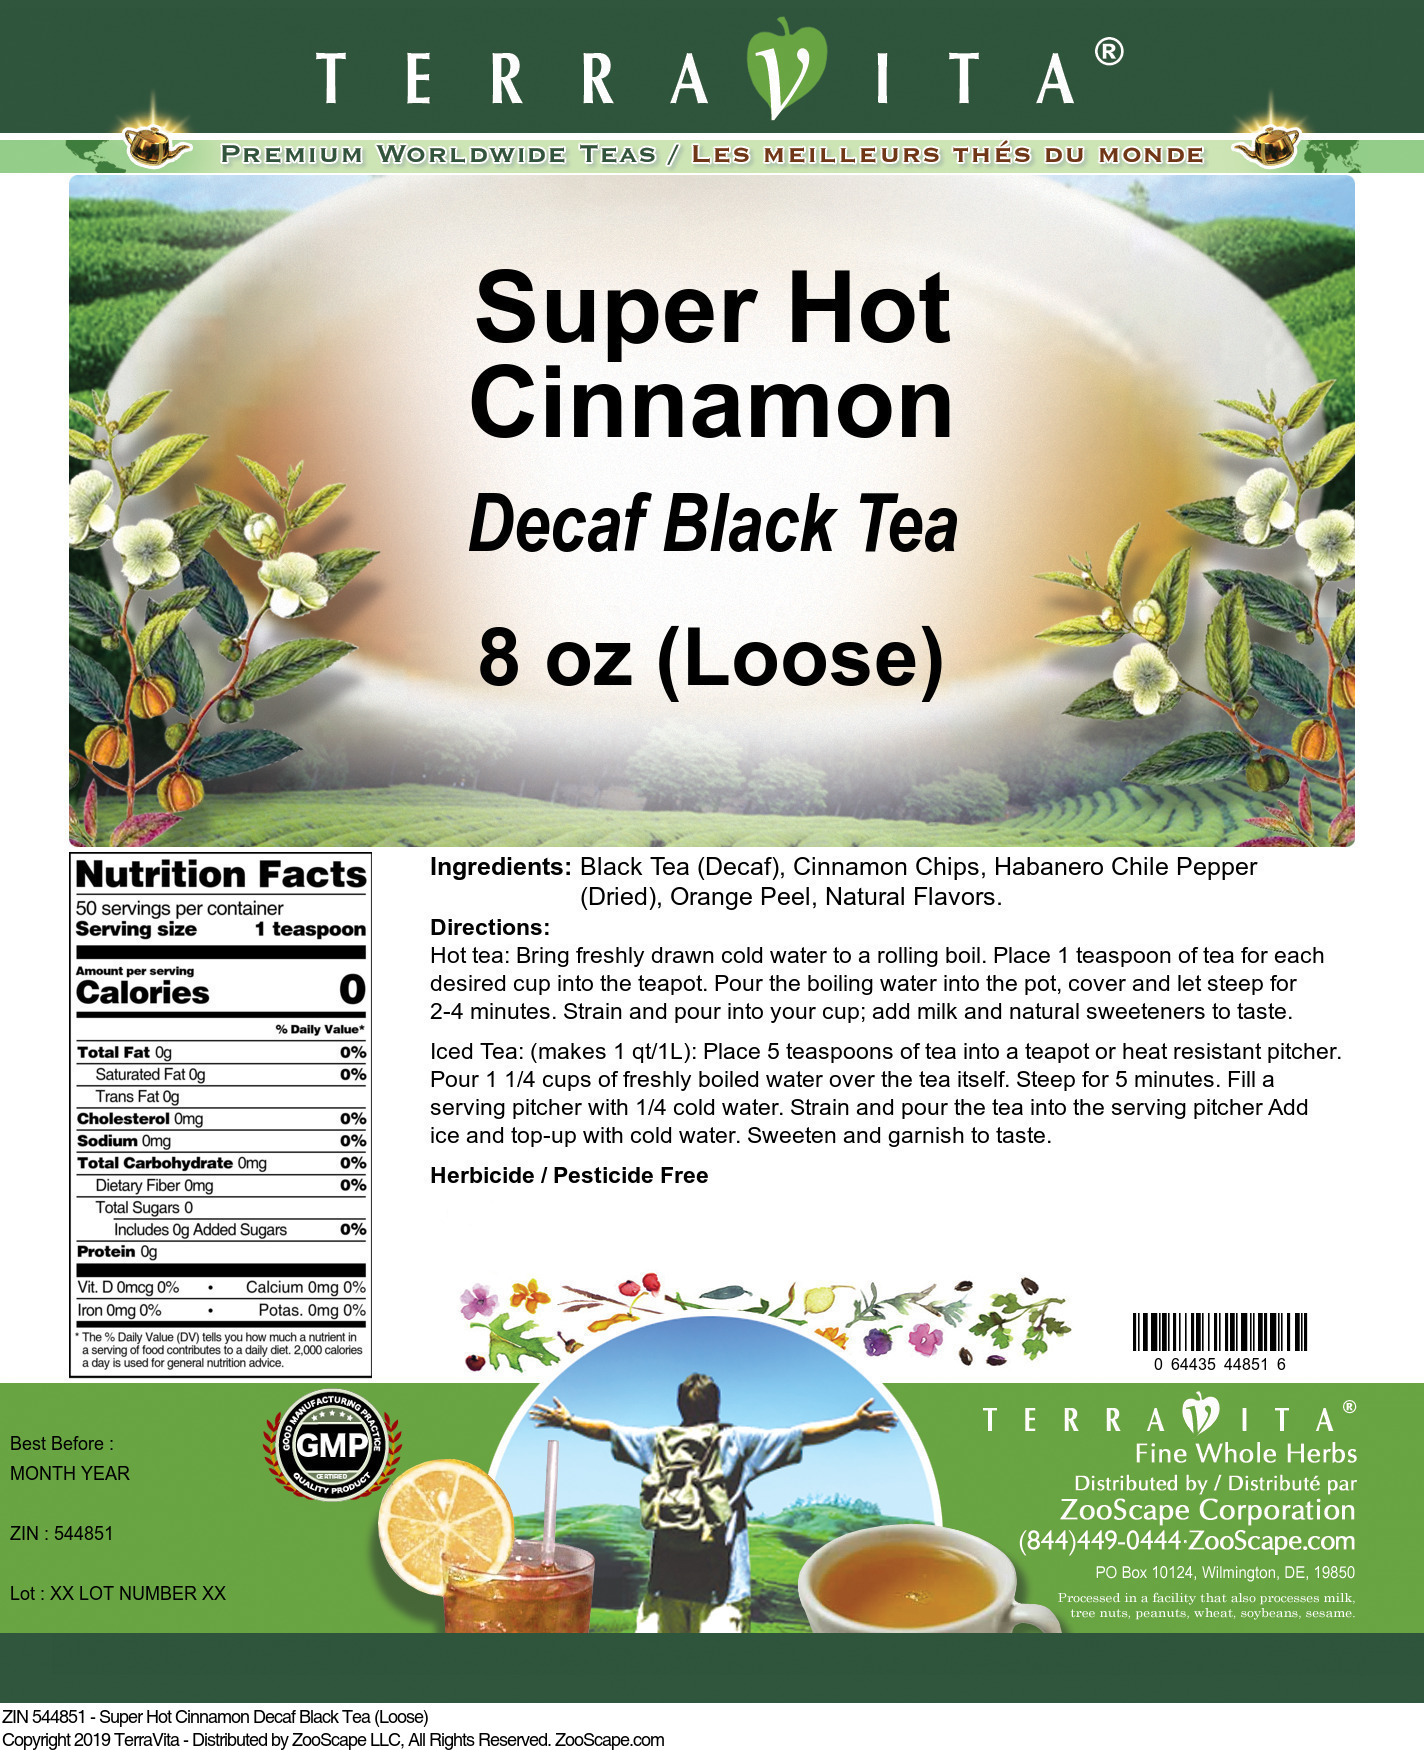 Super Hot Cinnamon Decaf Black Tea (Loose) - Label